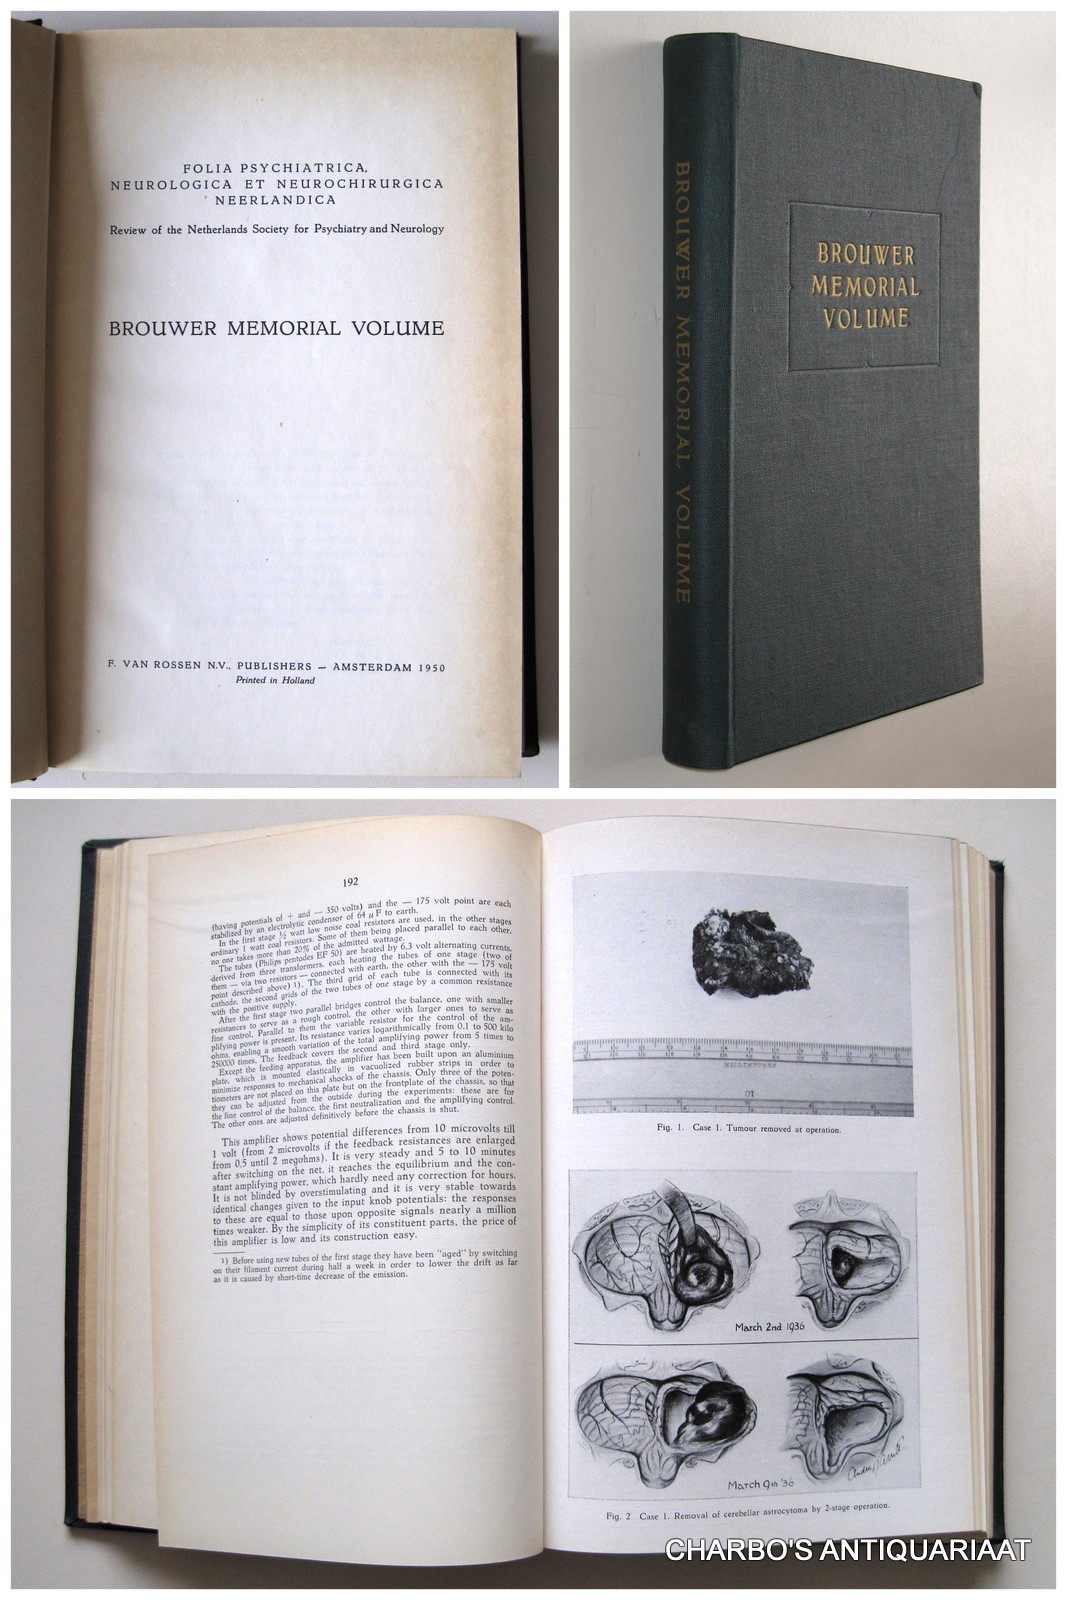 VARIOUS AUTHORS, -  Brouwer memorial volume.